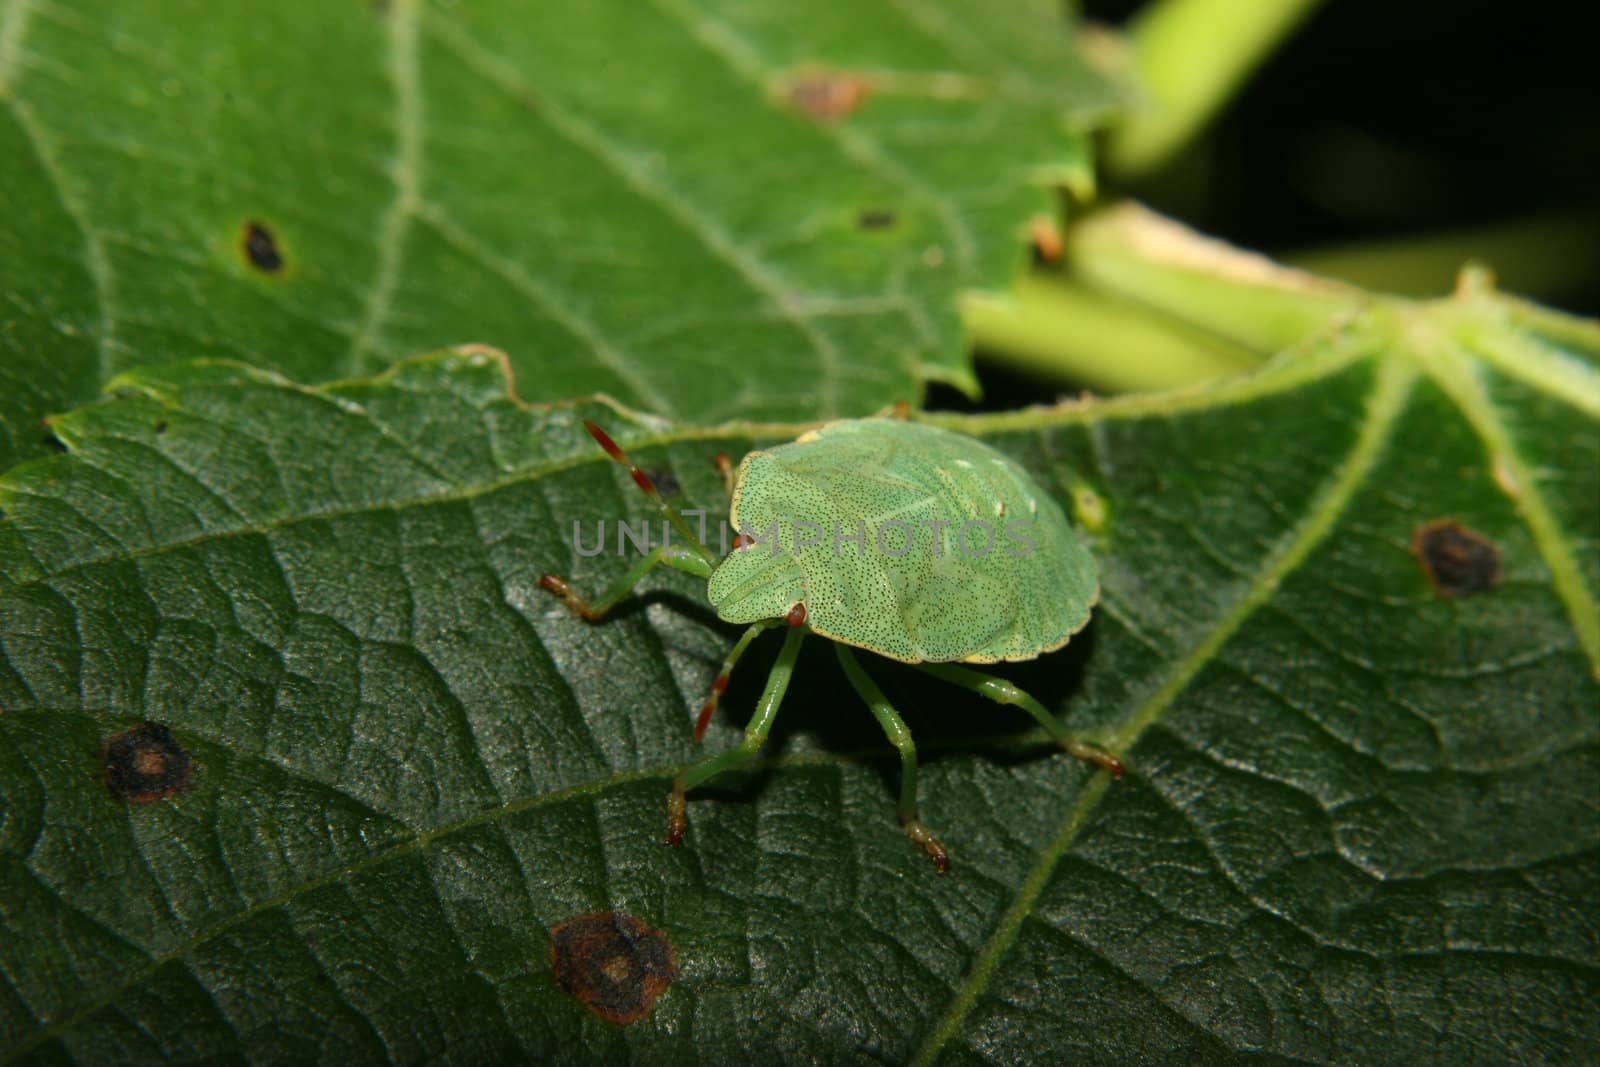 Larva of a Green shield bug (Palomena prasina) on a plant